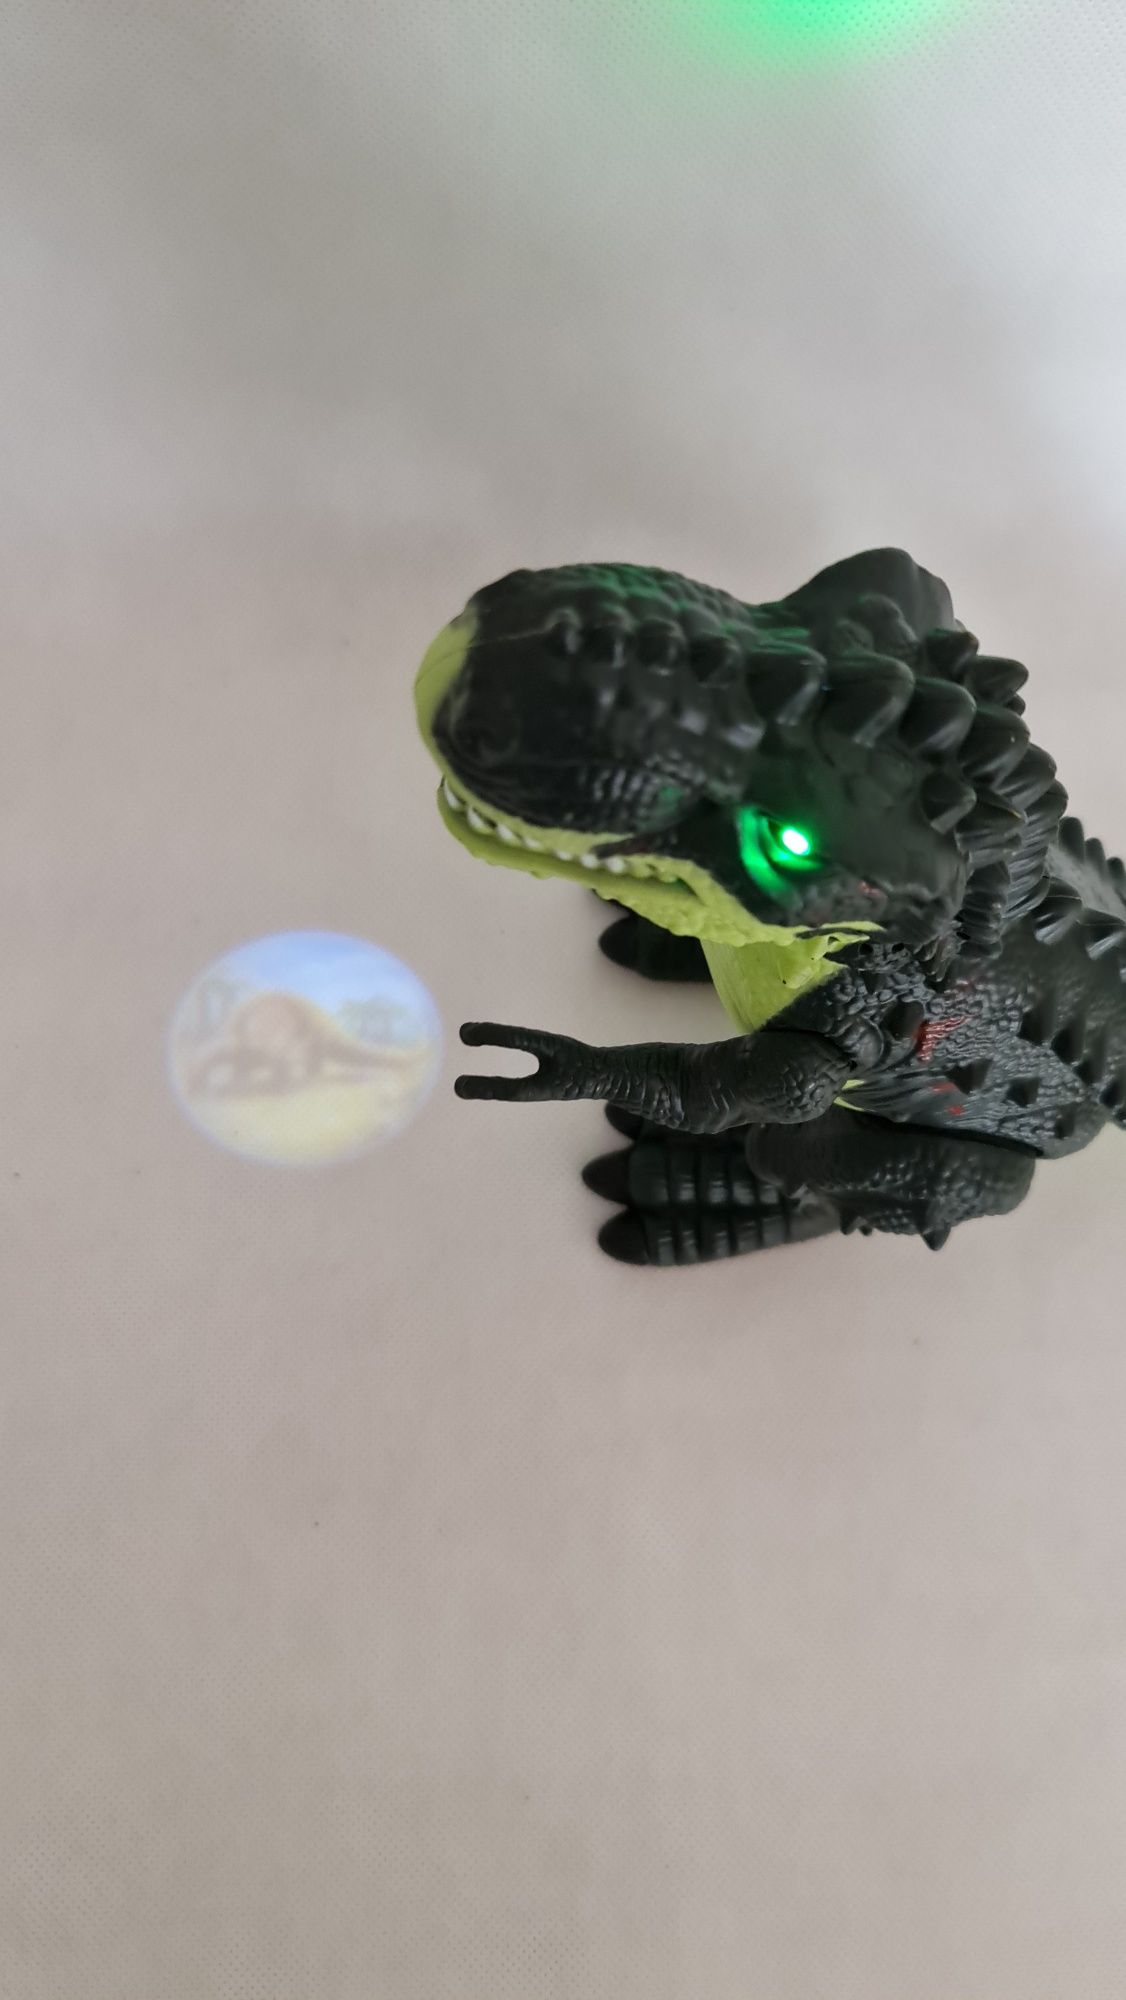 Super dinozaur T-REX znoszący jaja z projektorem